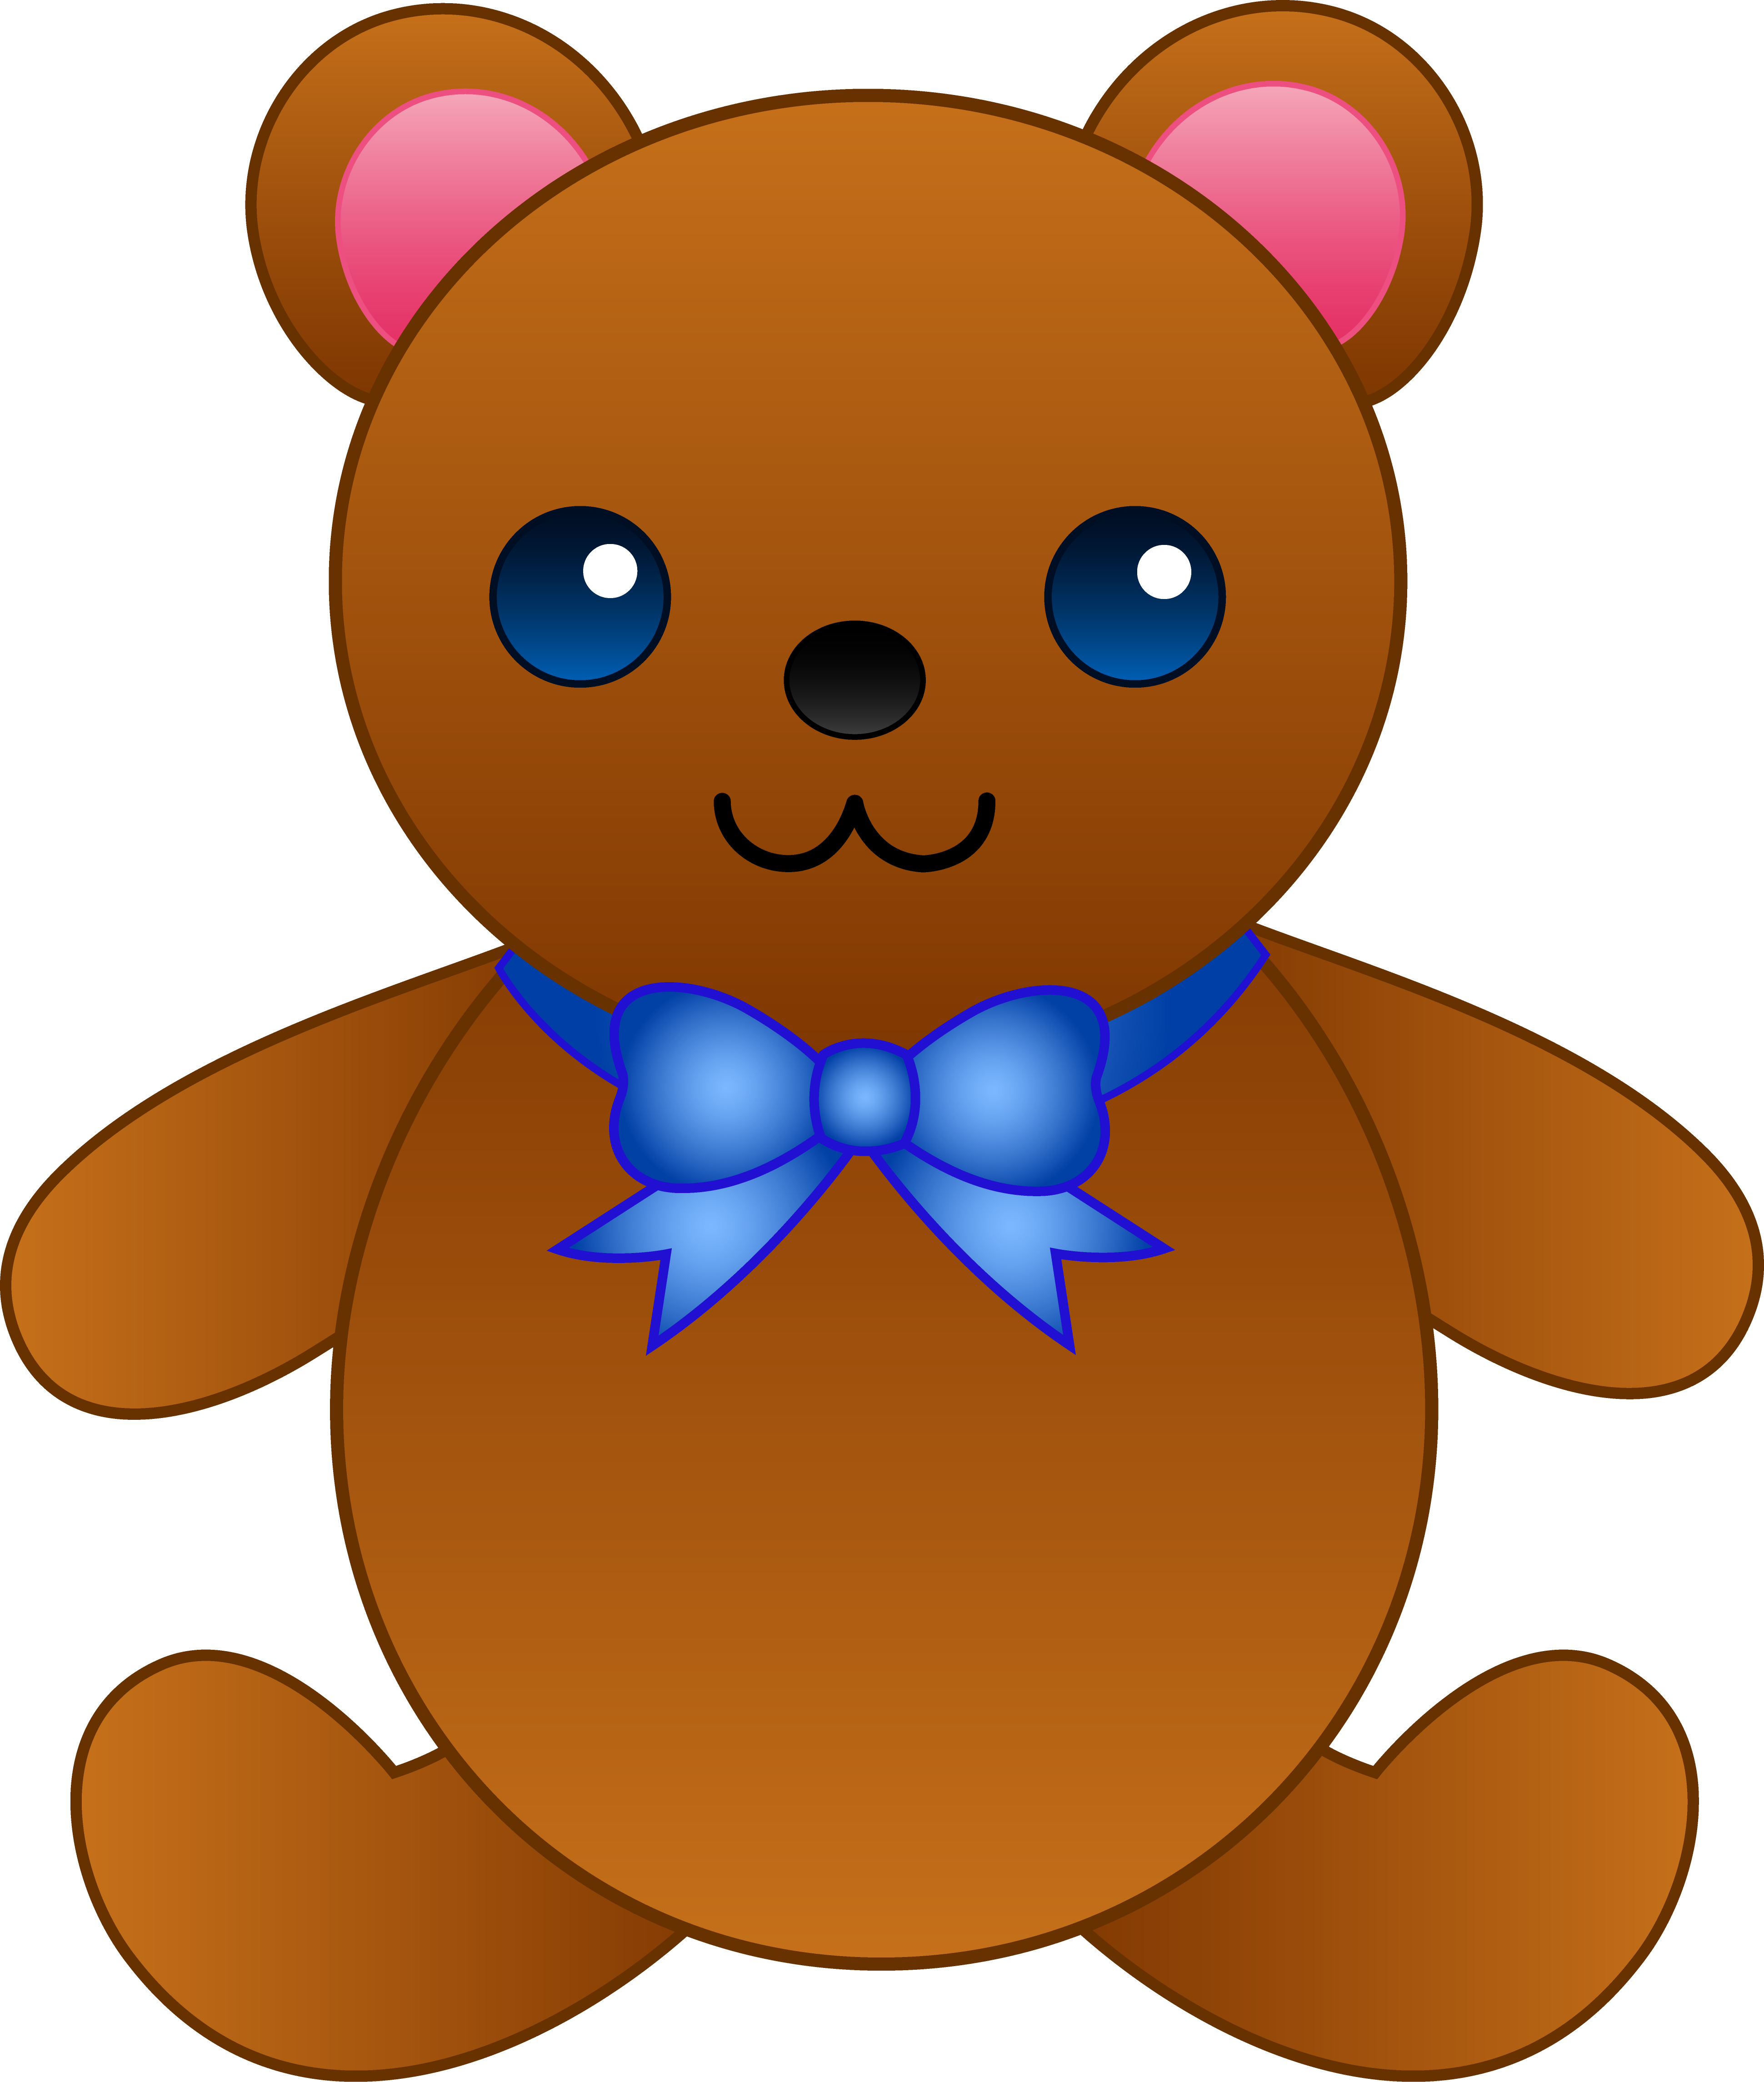 teddy bears clip art free download - photo #16